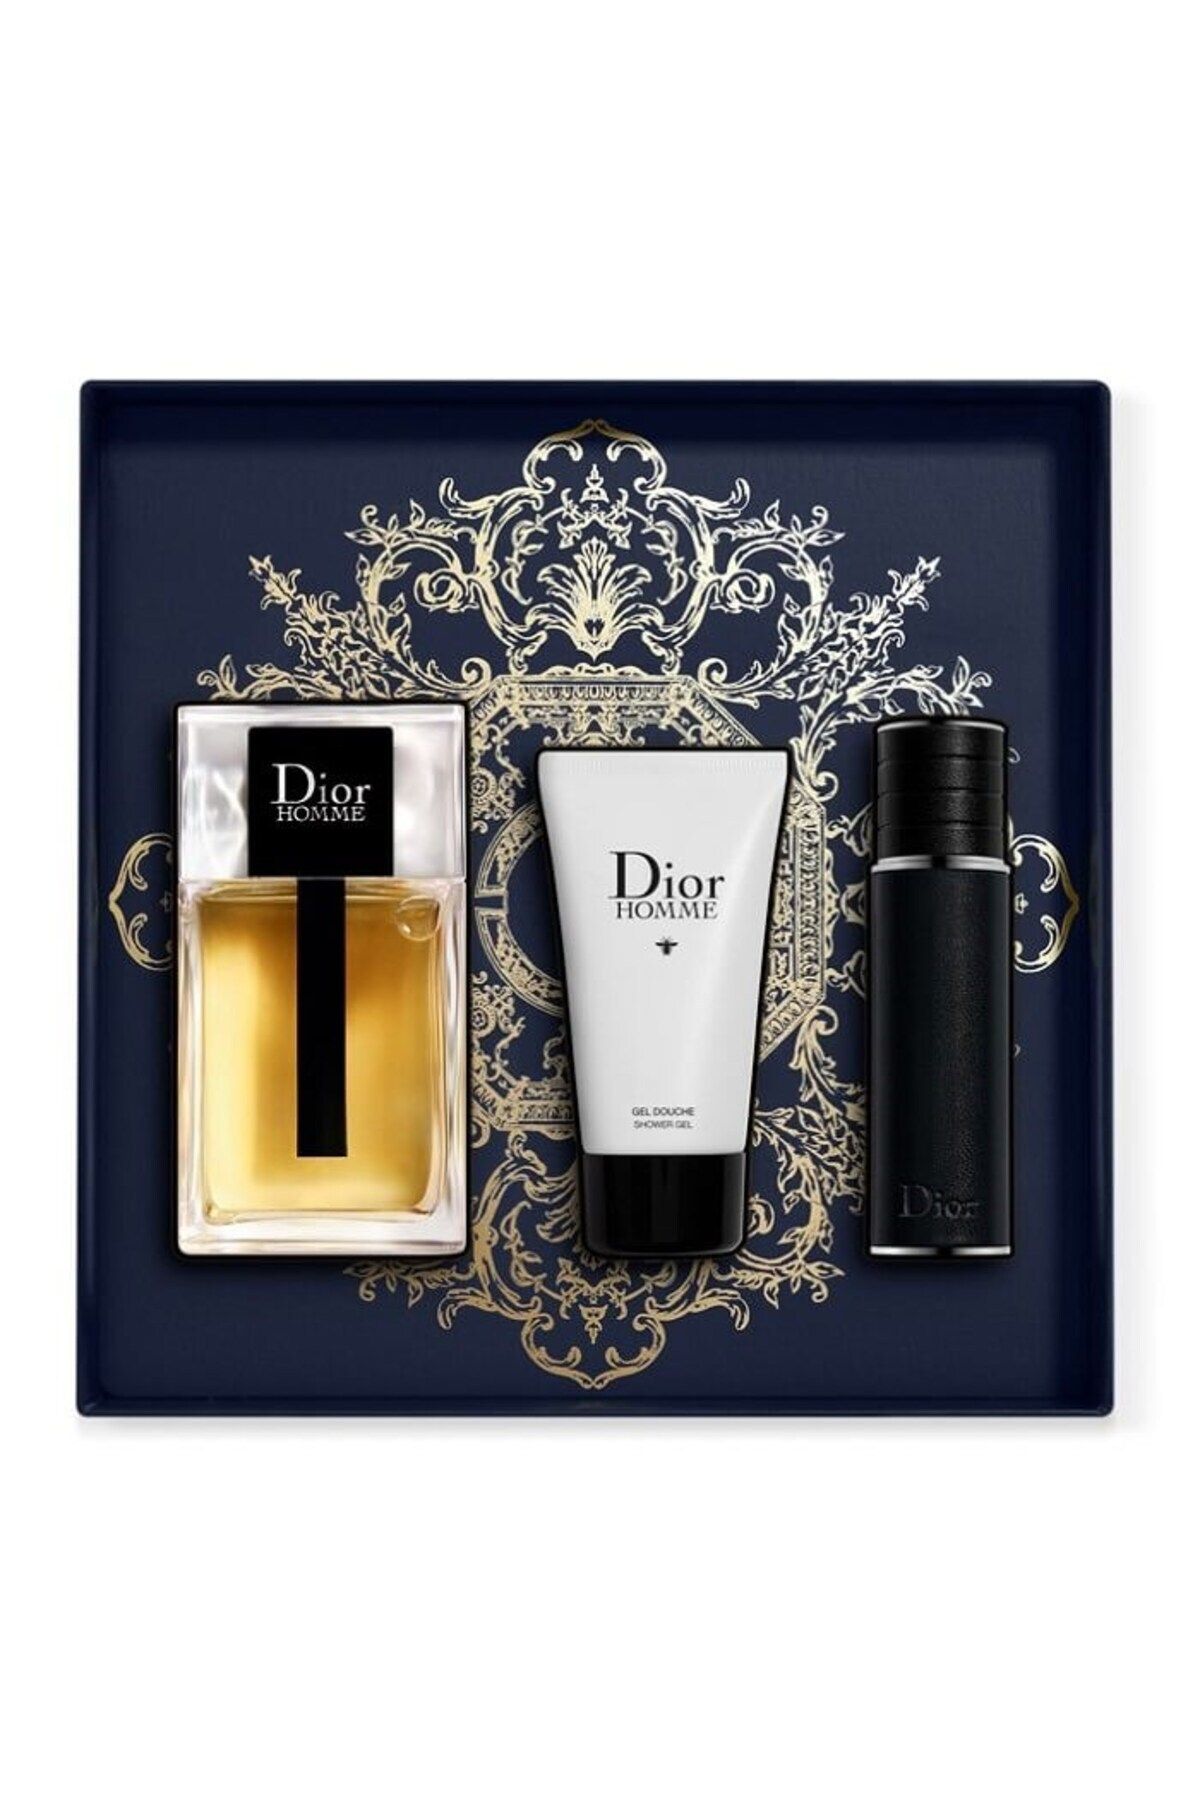 Dior Homme Erkek Bakım ve Parfüm 3 lü Set